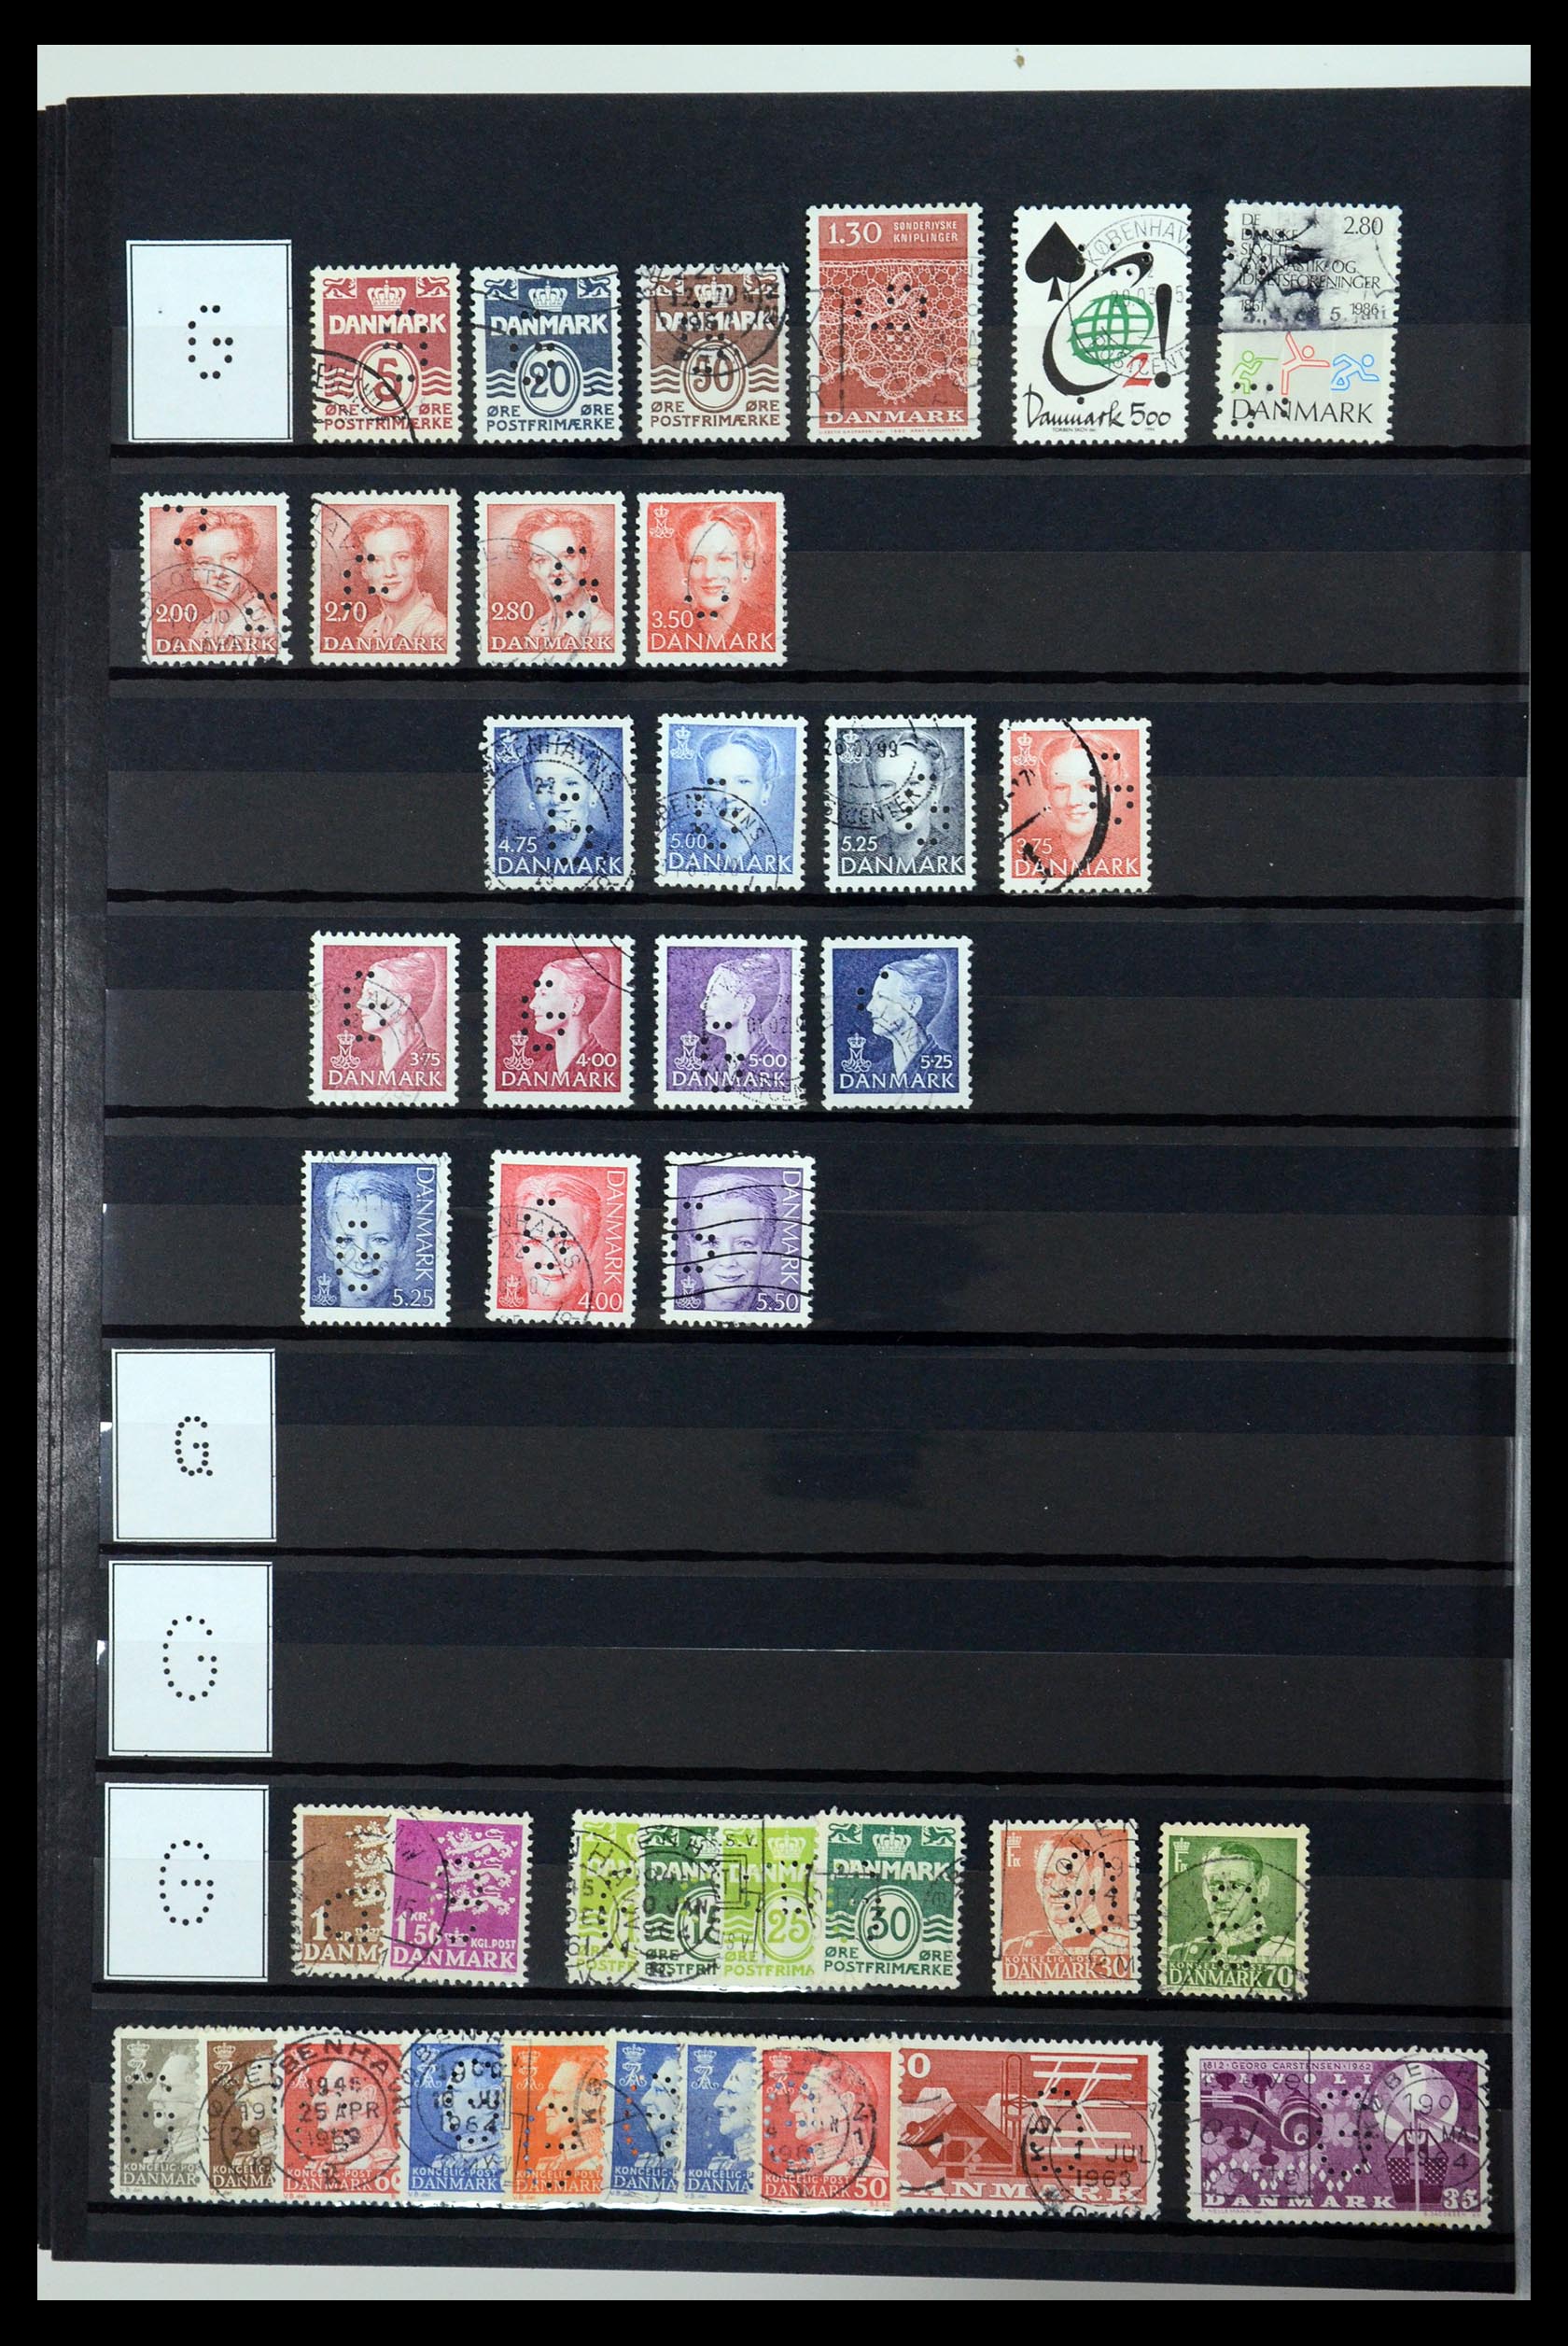 36396 057 - Stamp collection 36396 Denmark perfins.